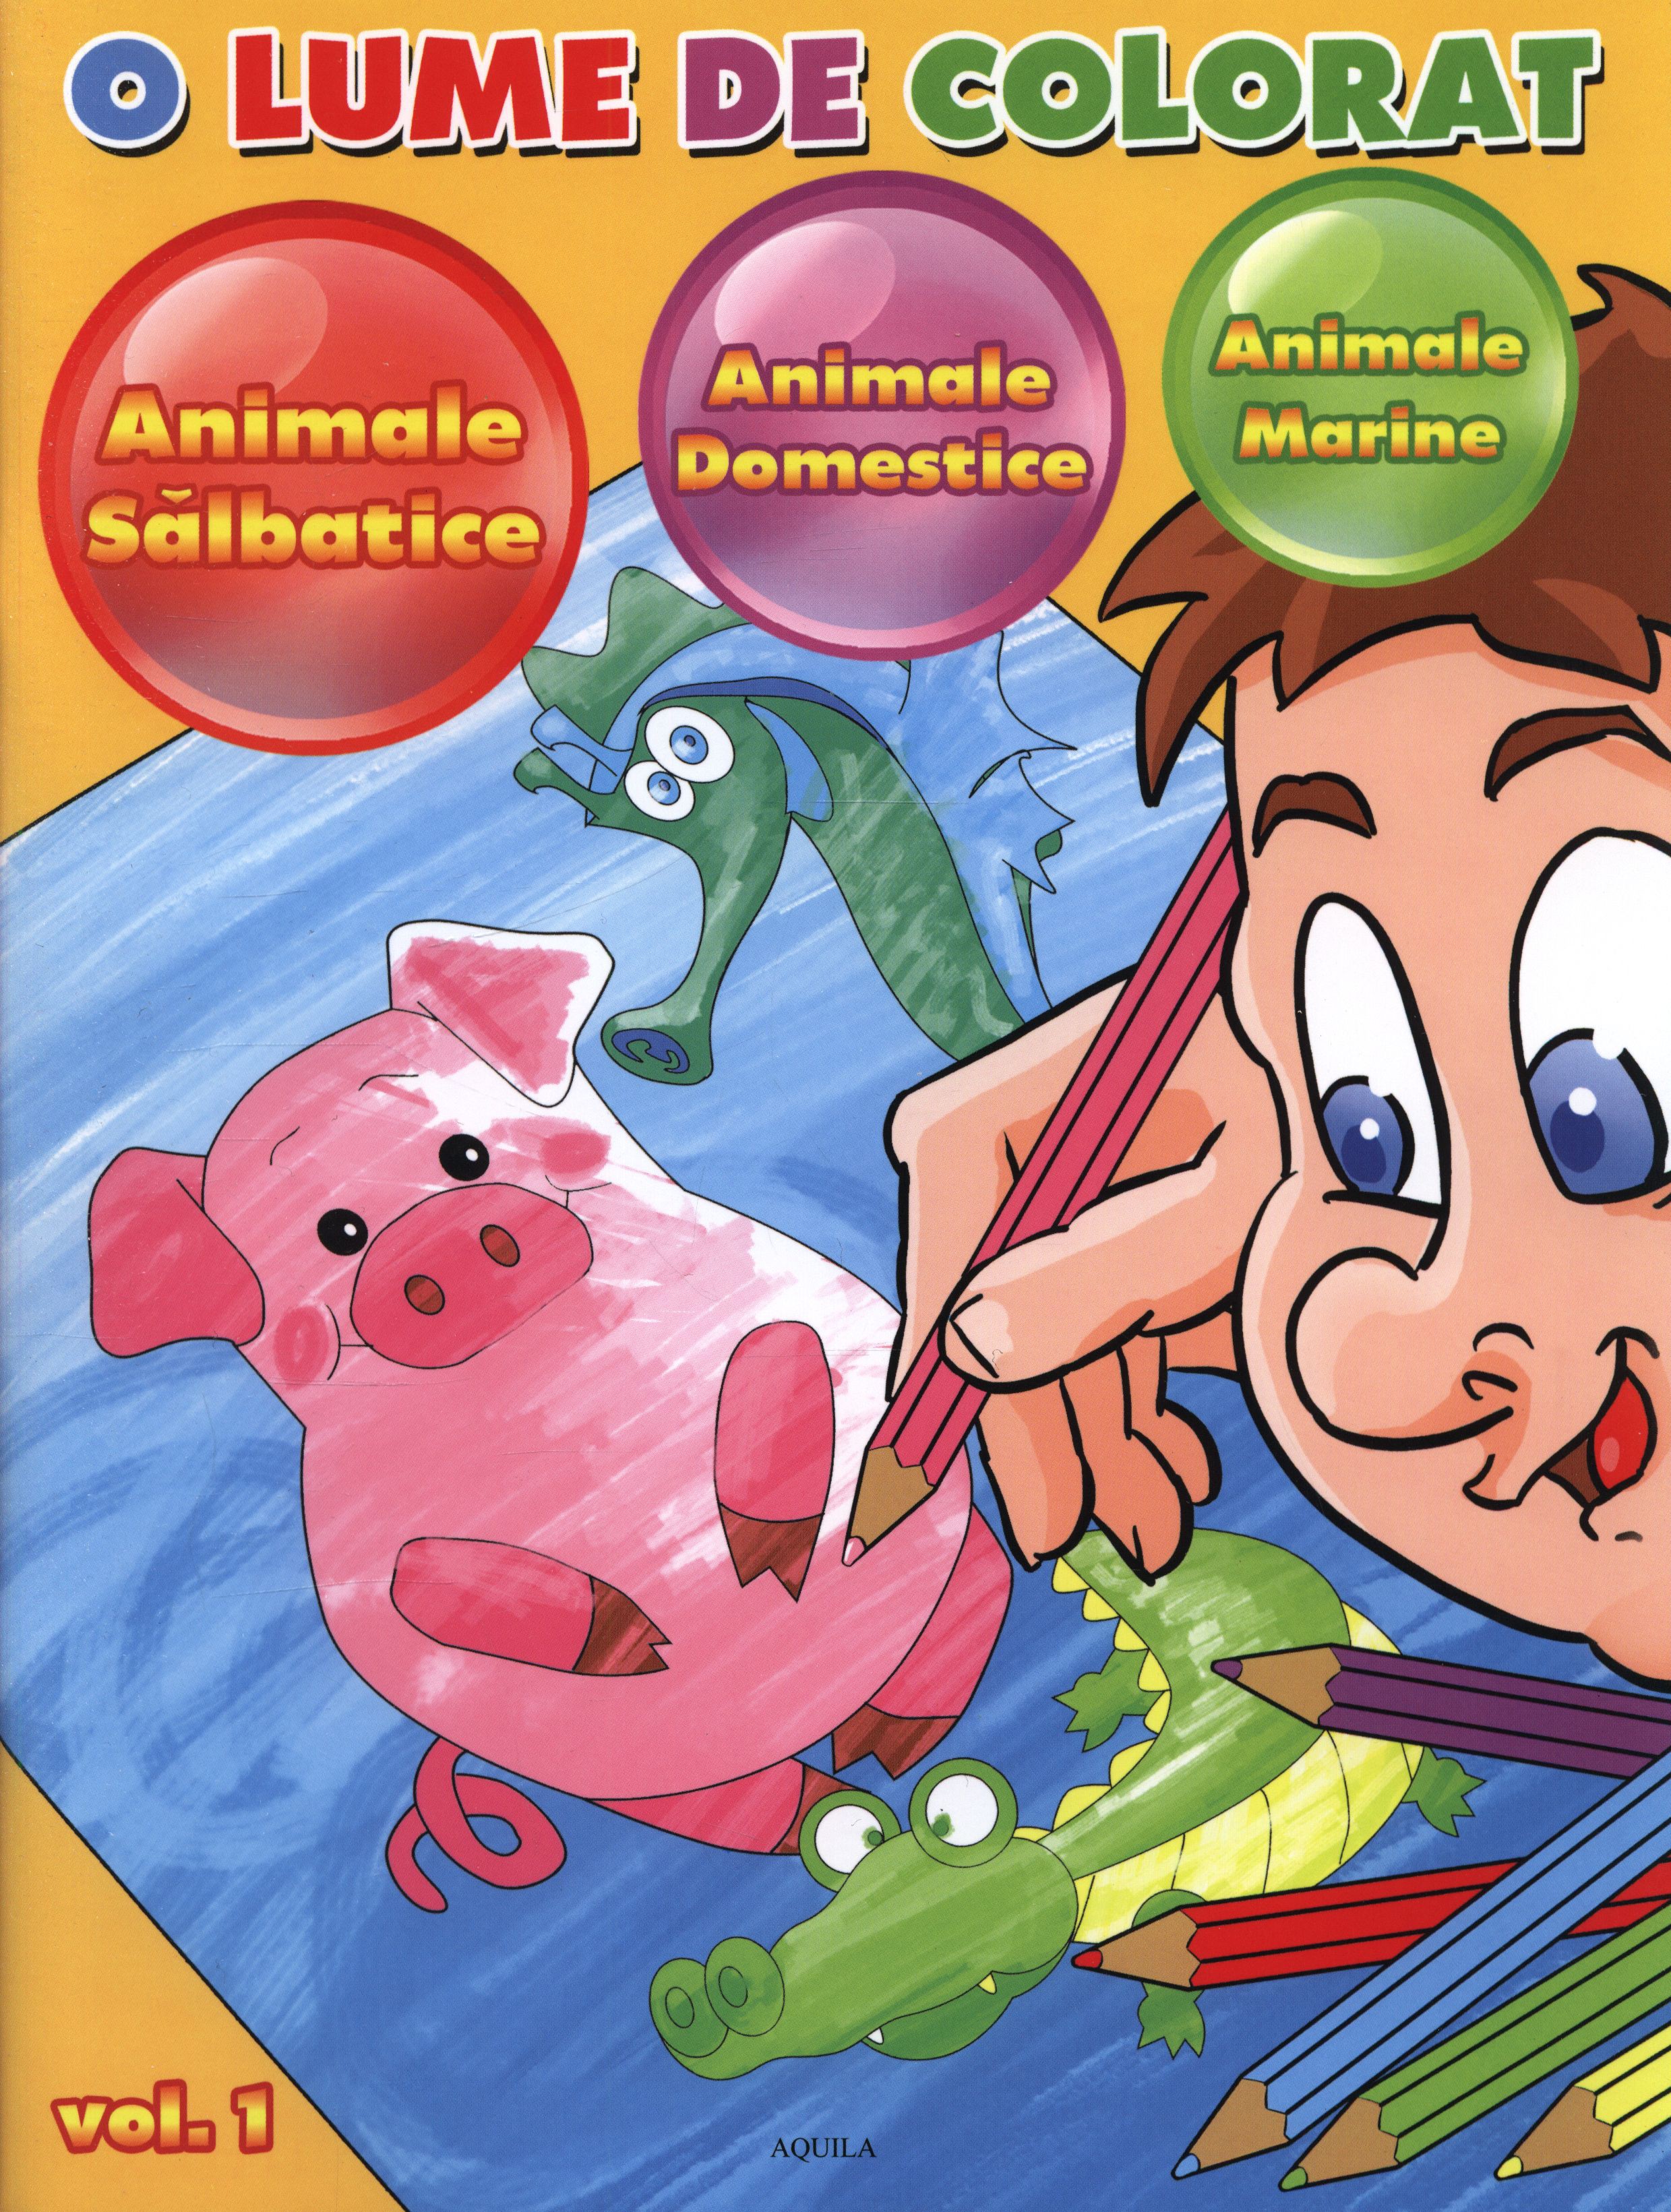 O lume de colorat. Vol. 1 - Animale salbatice. Animale domestice. Animale marine